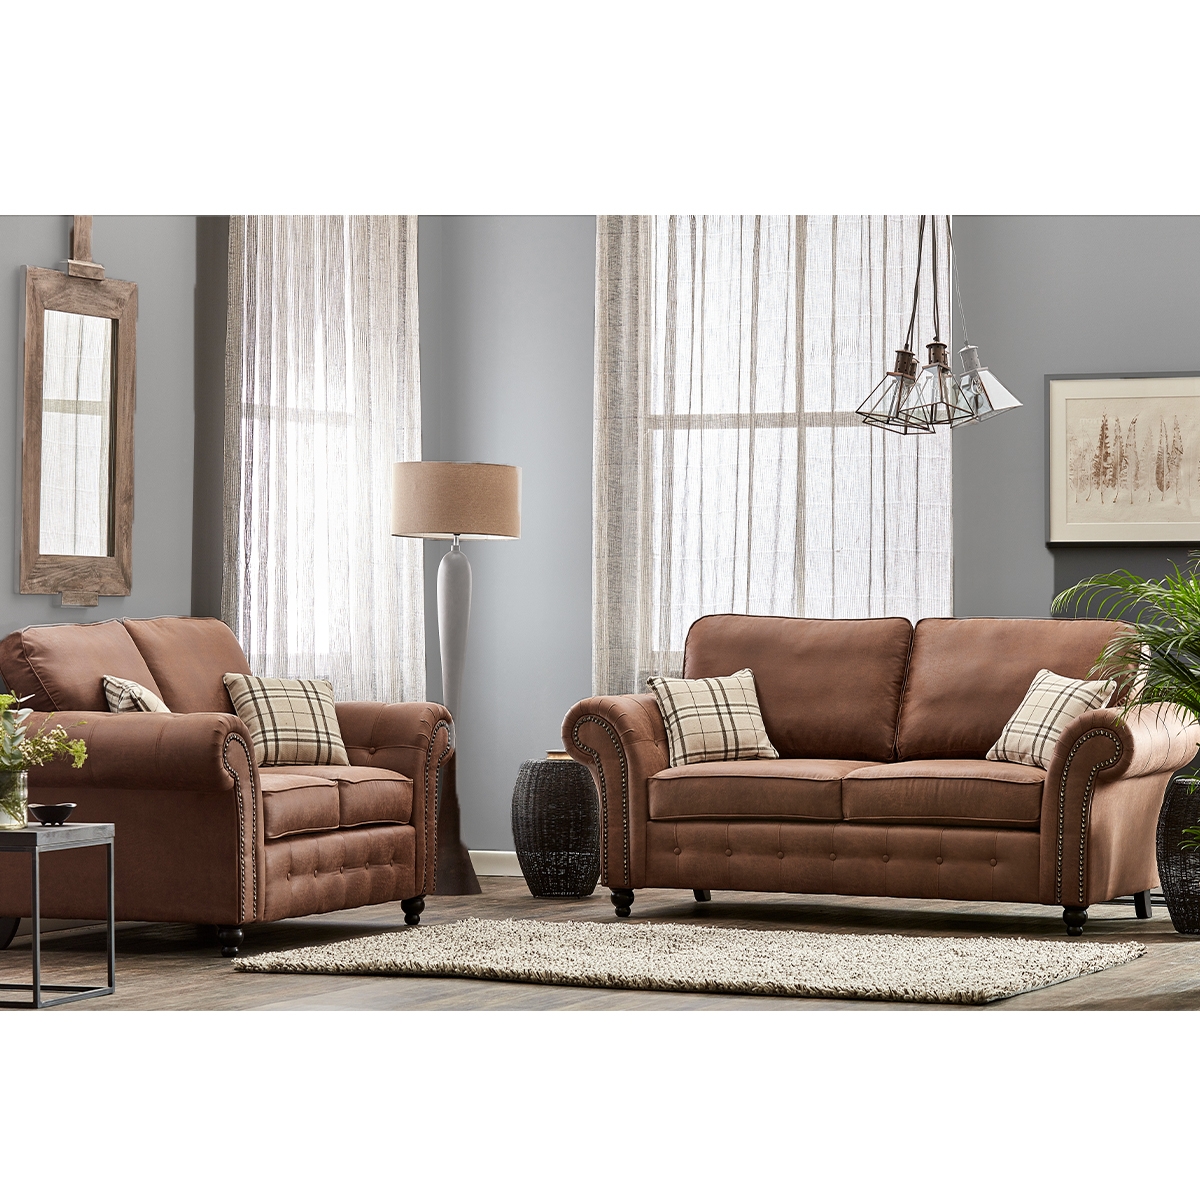 Oakland Leather 3 + 2 Sofa Suite – Tan Brown – The Online Sofa Shop